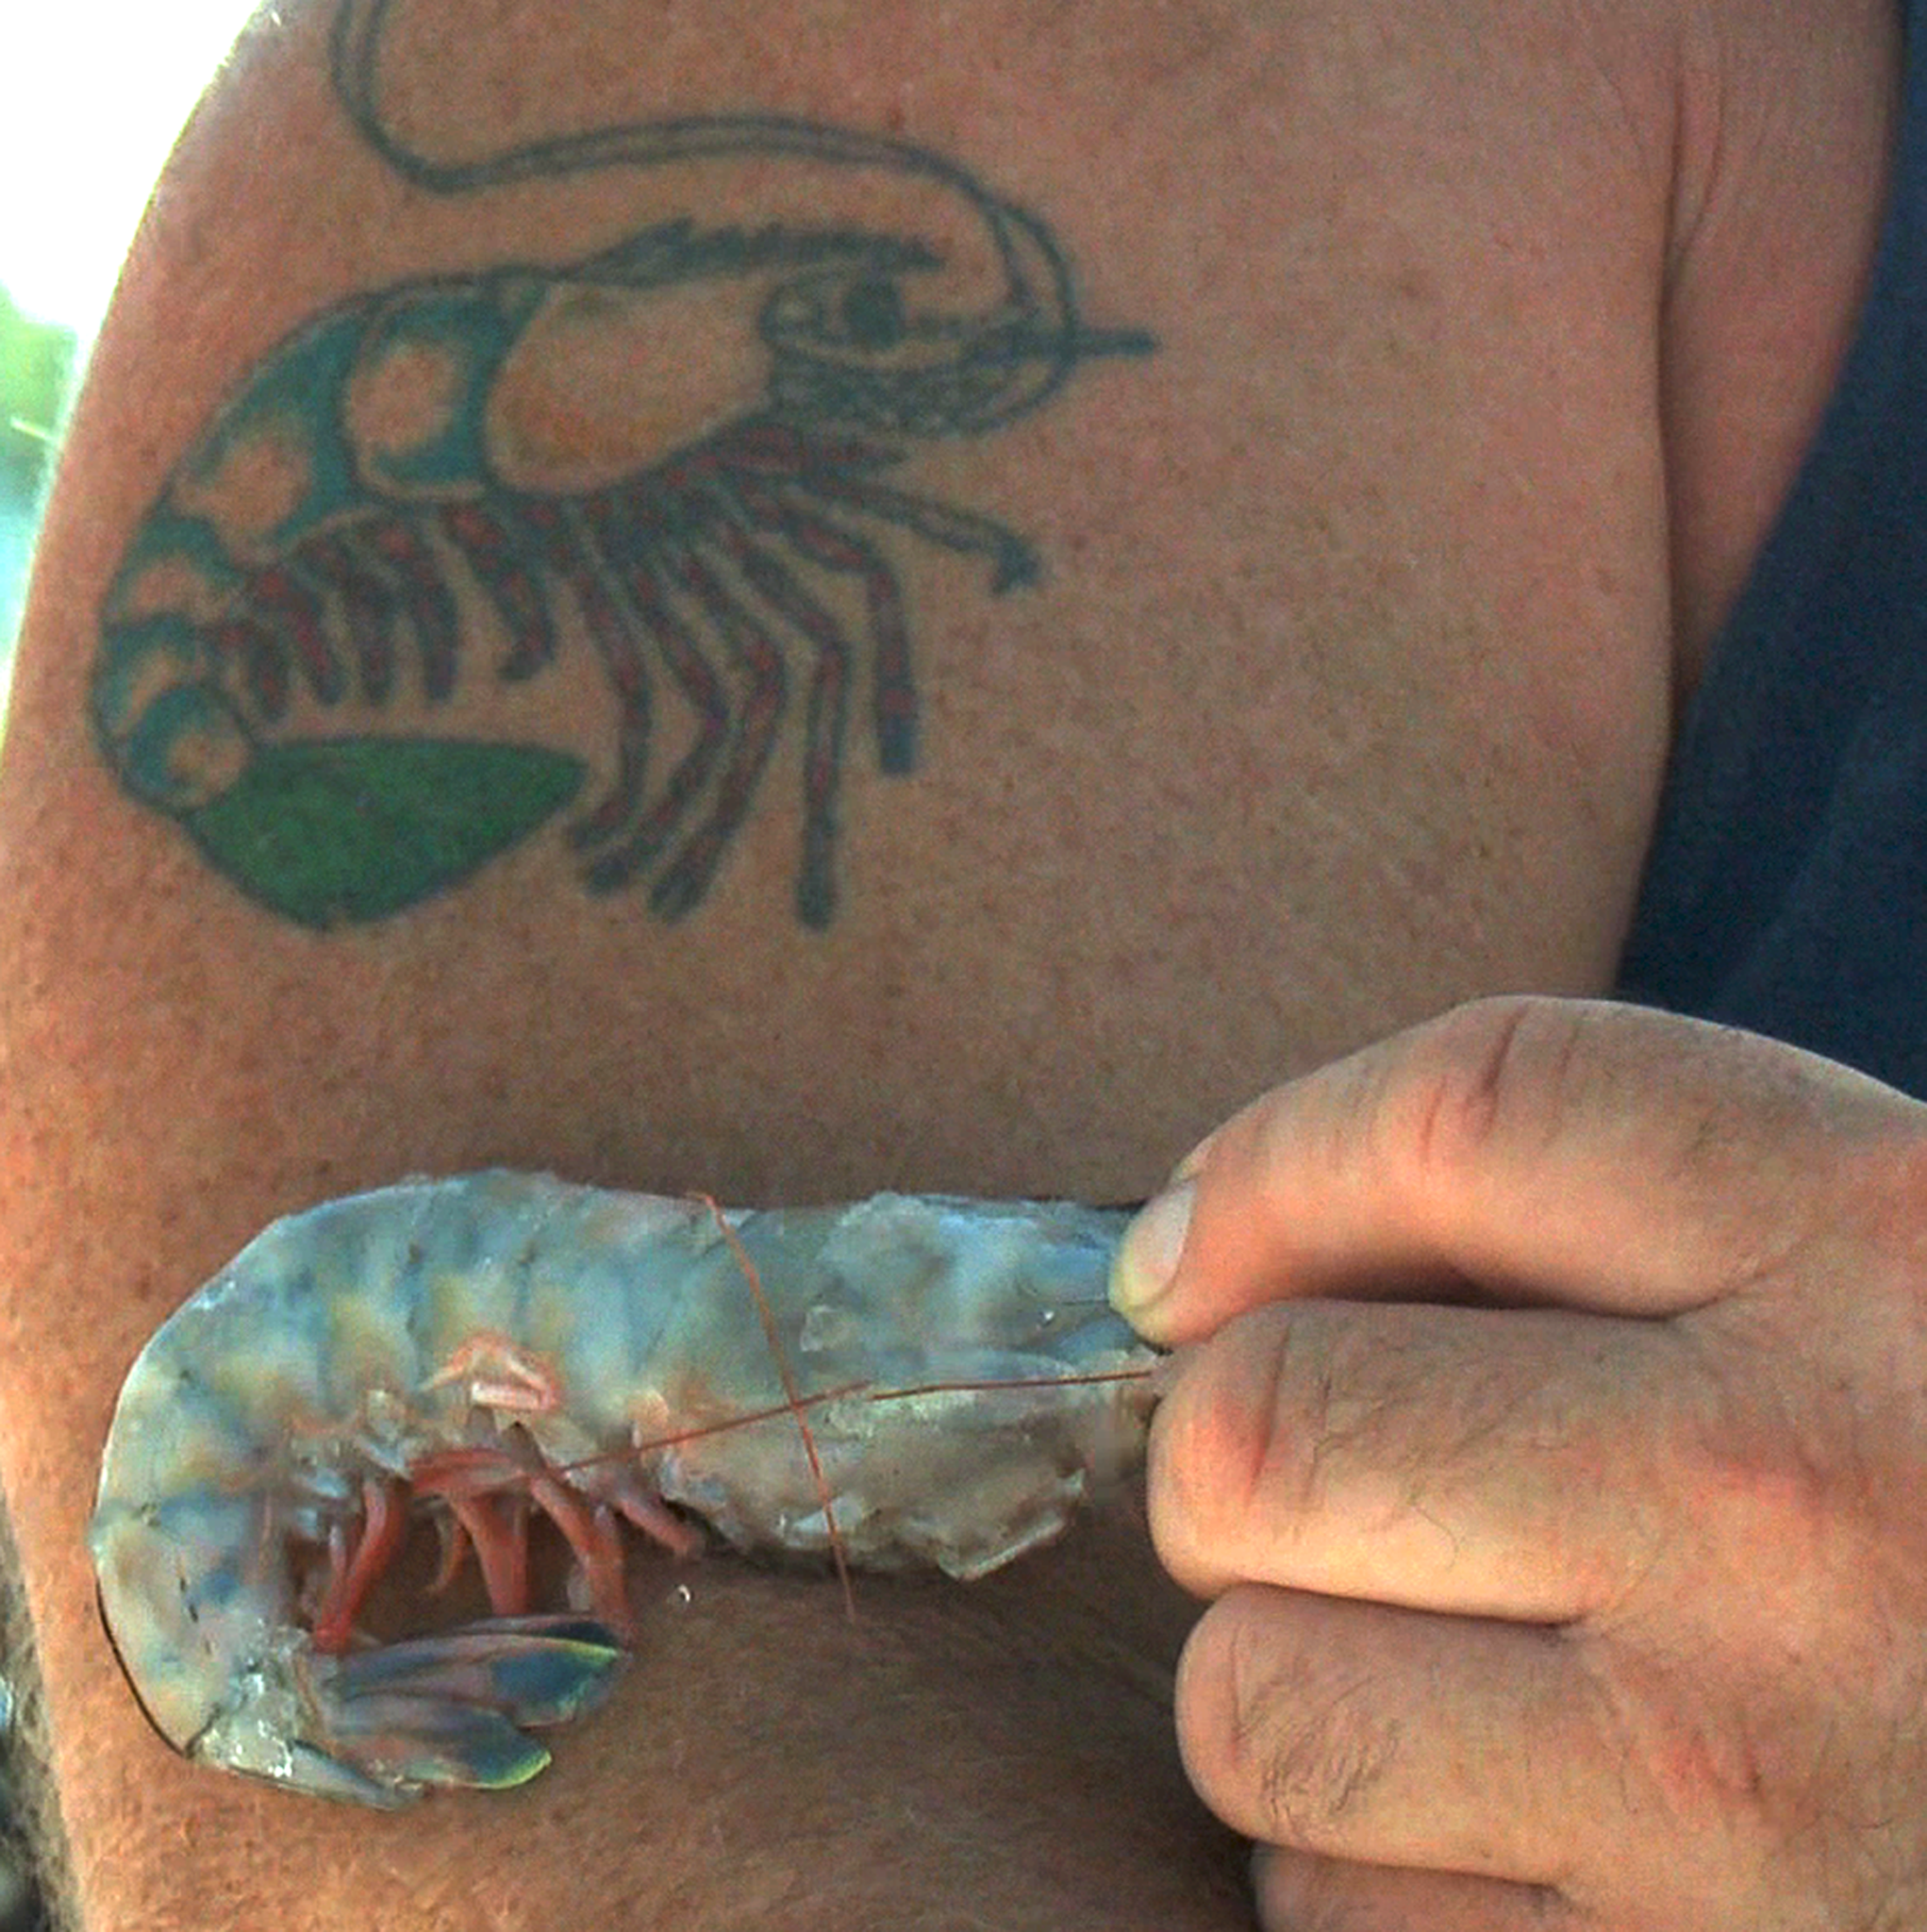 Shrimp tattoo, from documentary "Raising Shrimp"